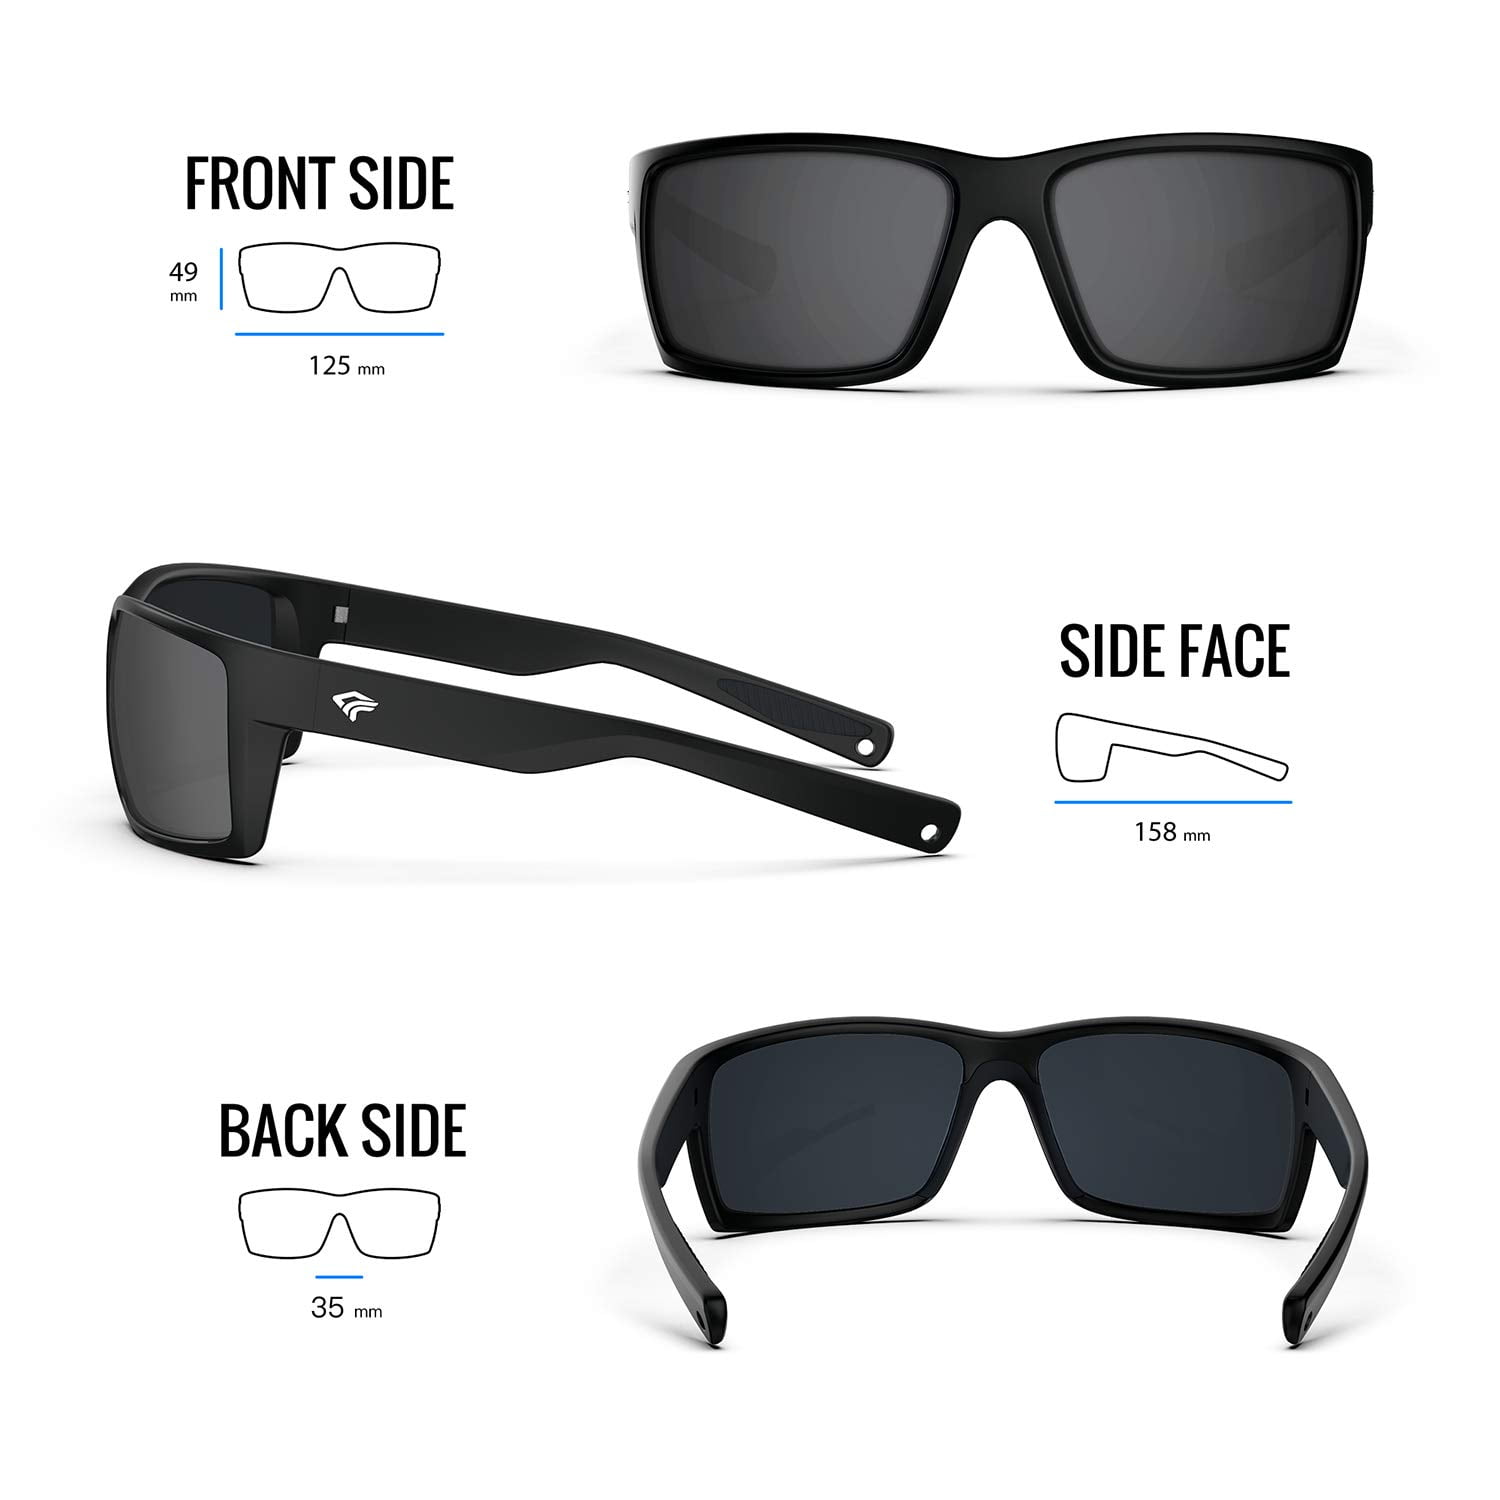 TOREGE Sports Polarized Sunglasses for Men Women Flexible